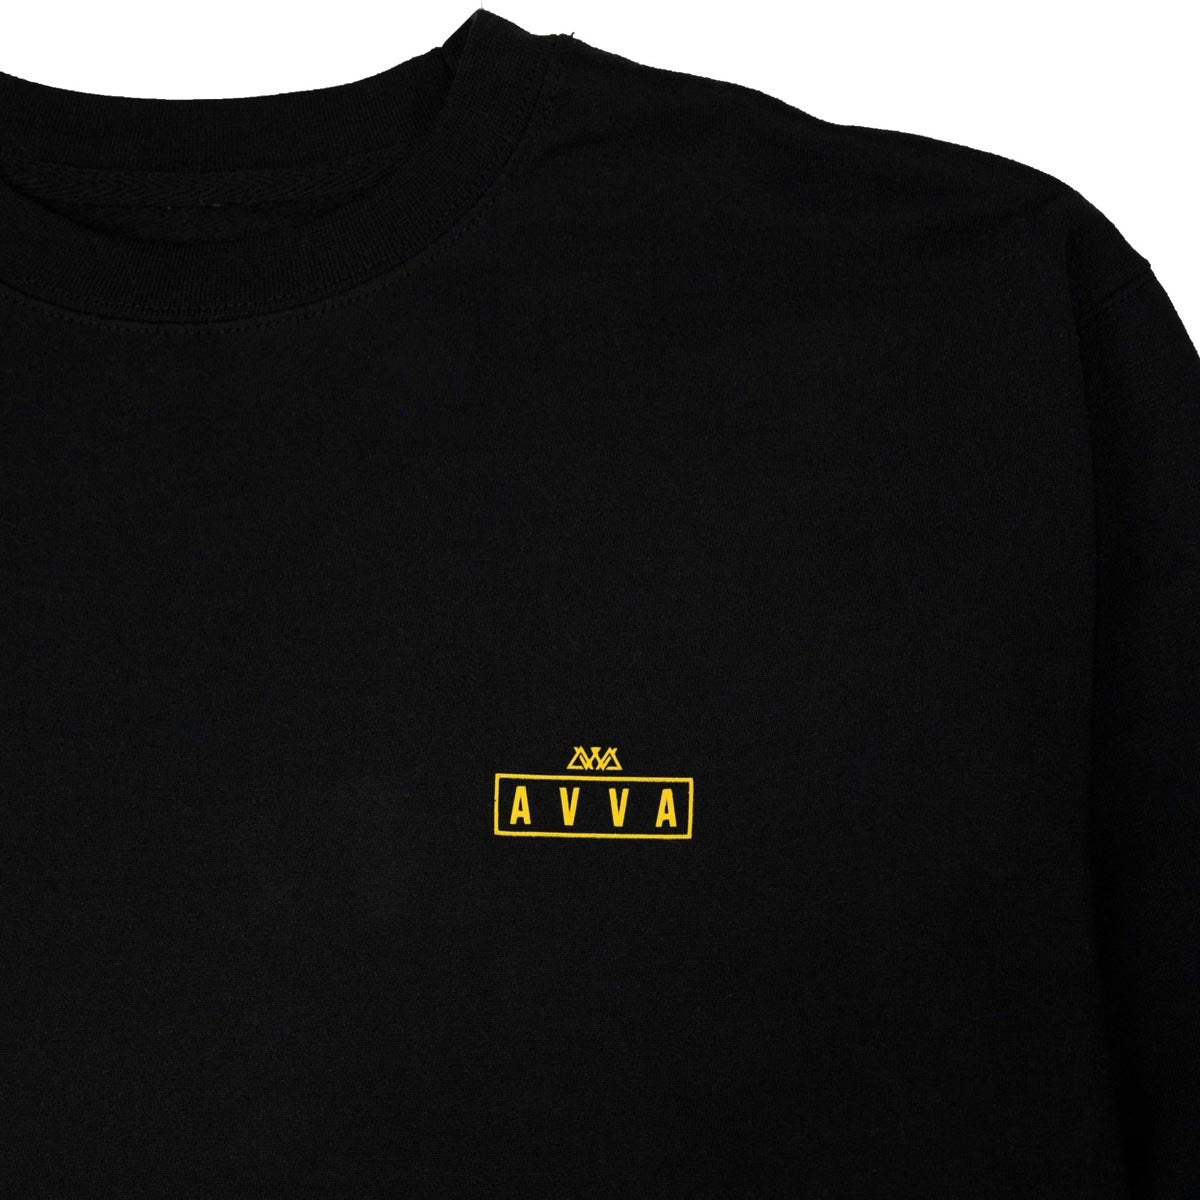 AVVA Varial Crew Sweatshirt - Black image 2